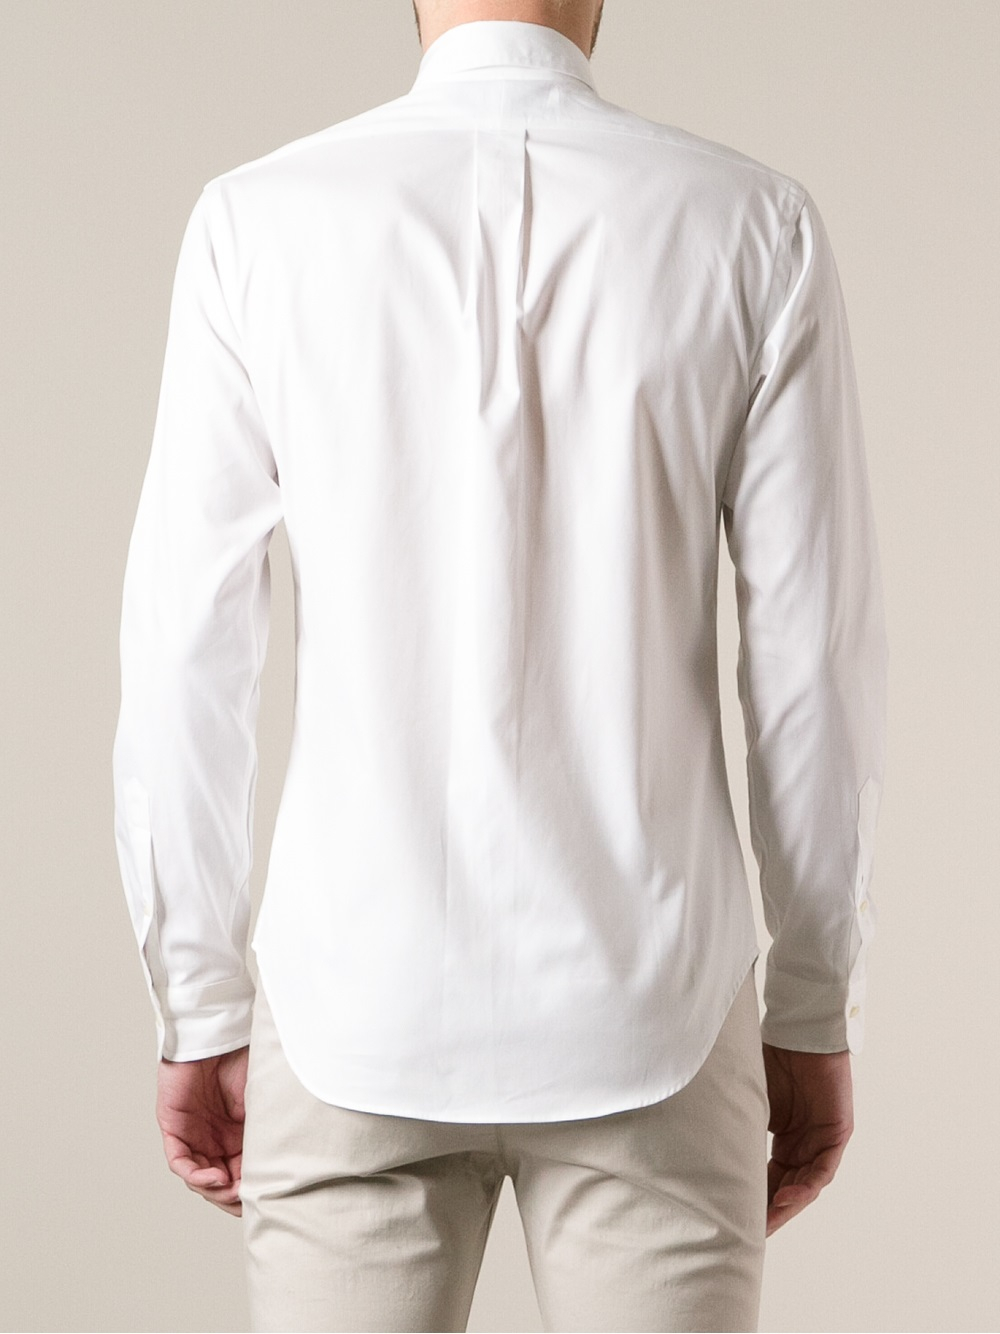 Lyst - Polo Ralph Lauren Classic Shirt in White for Men